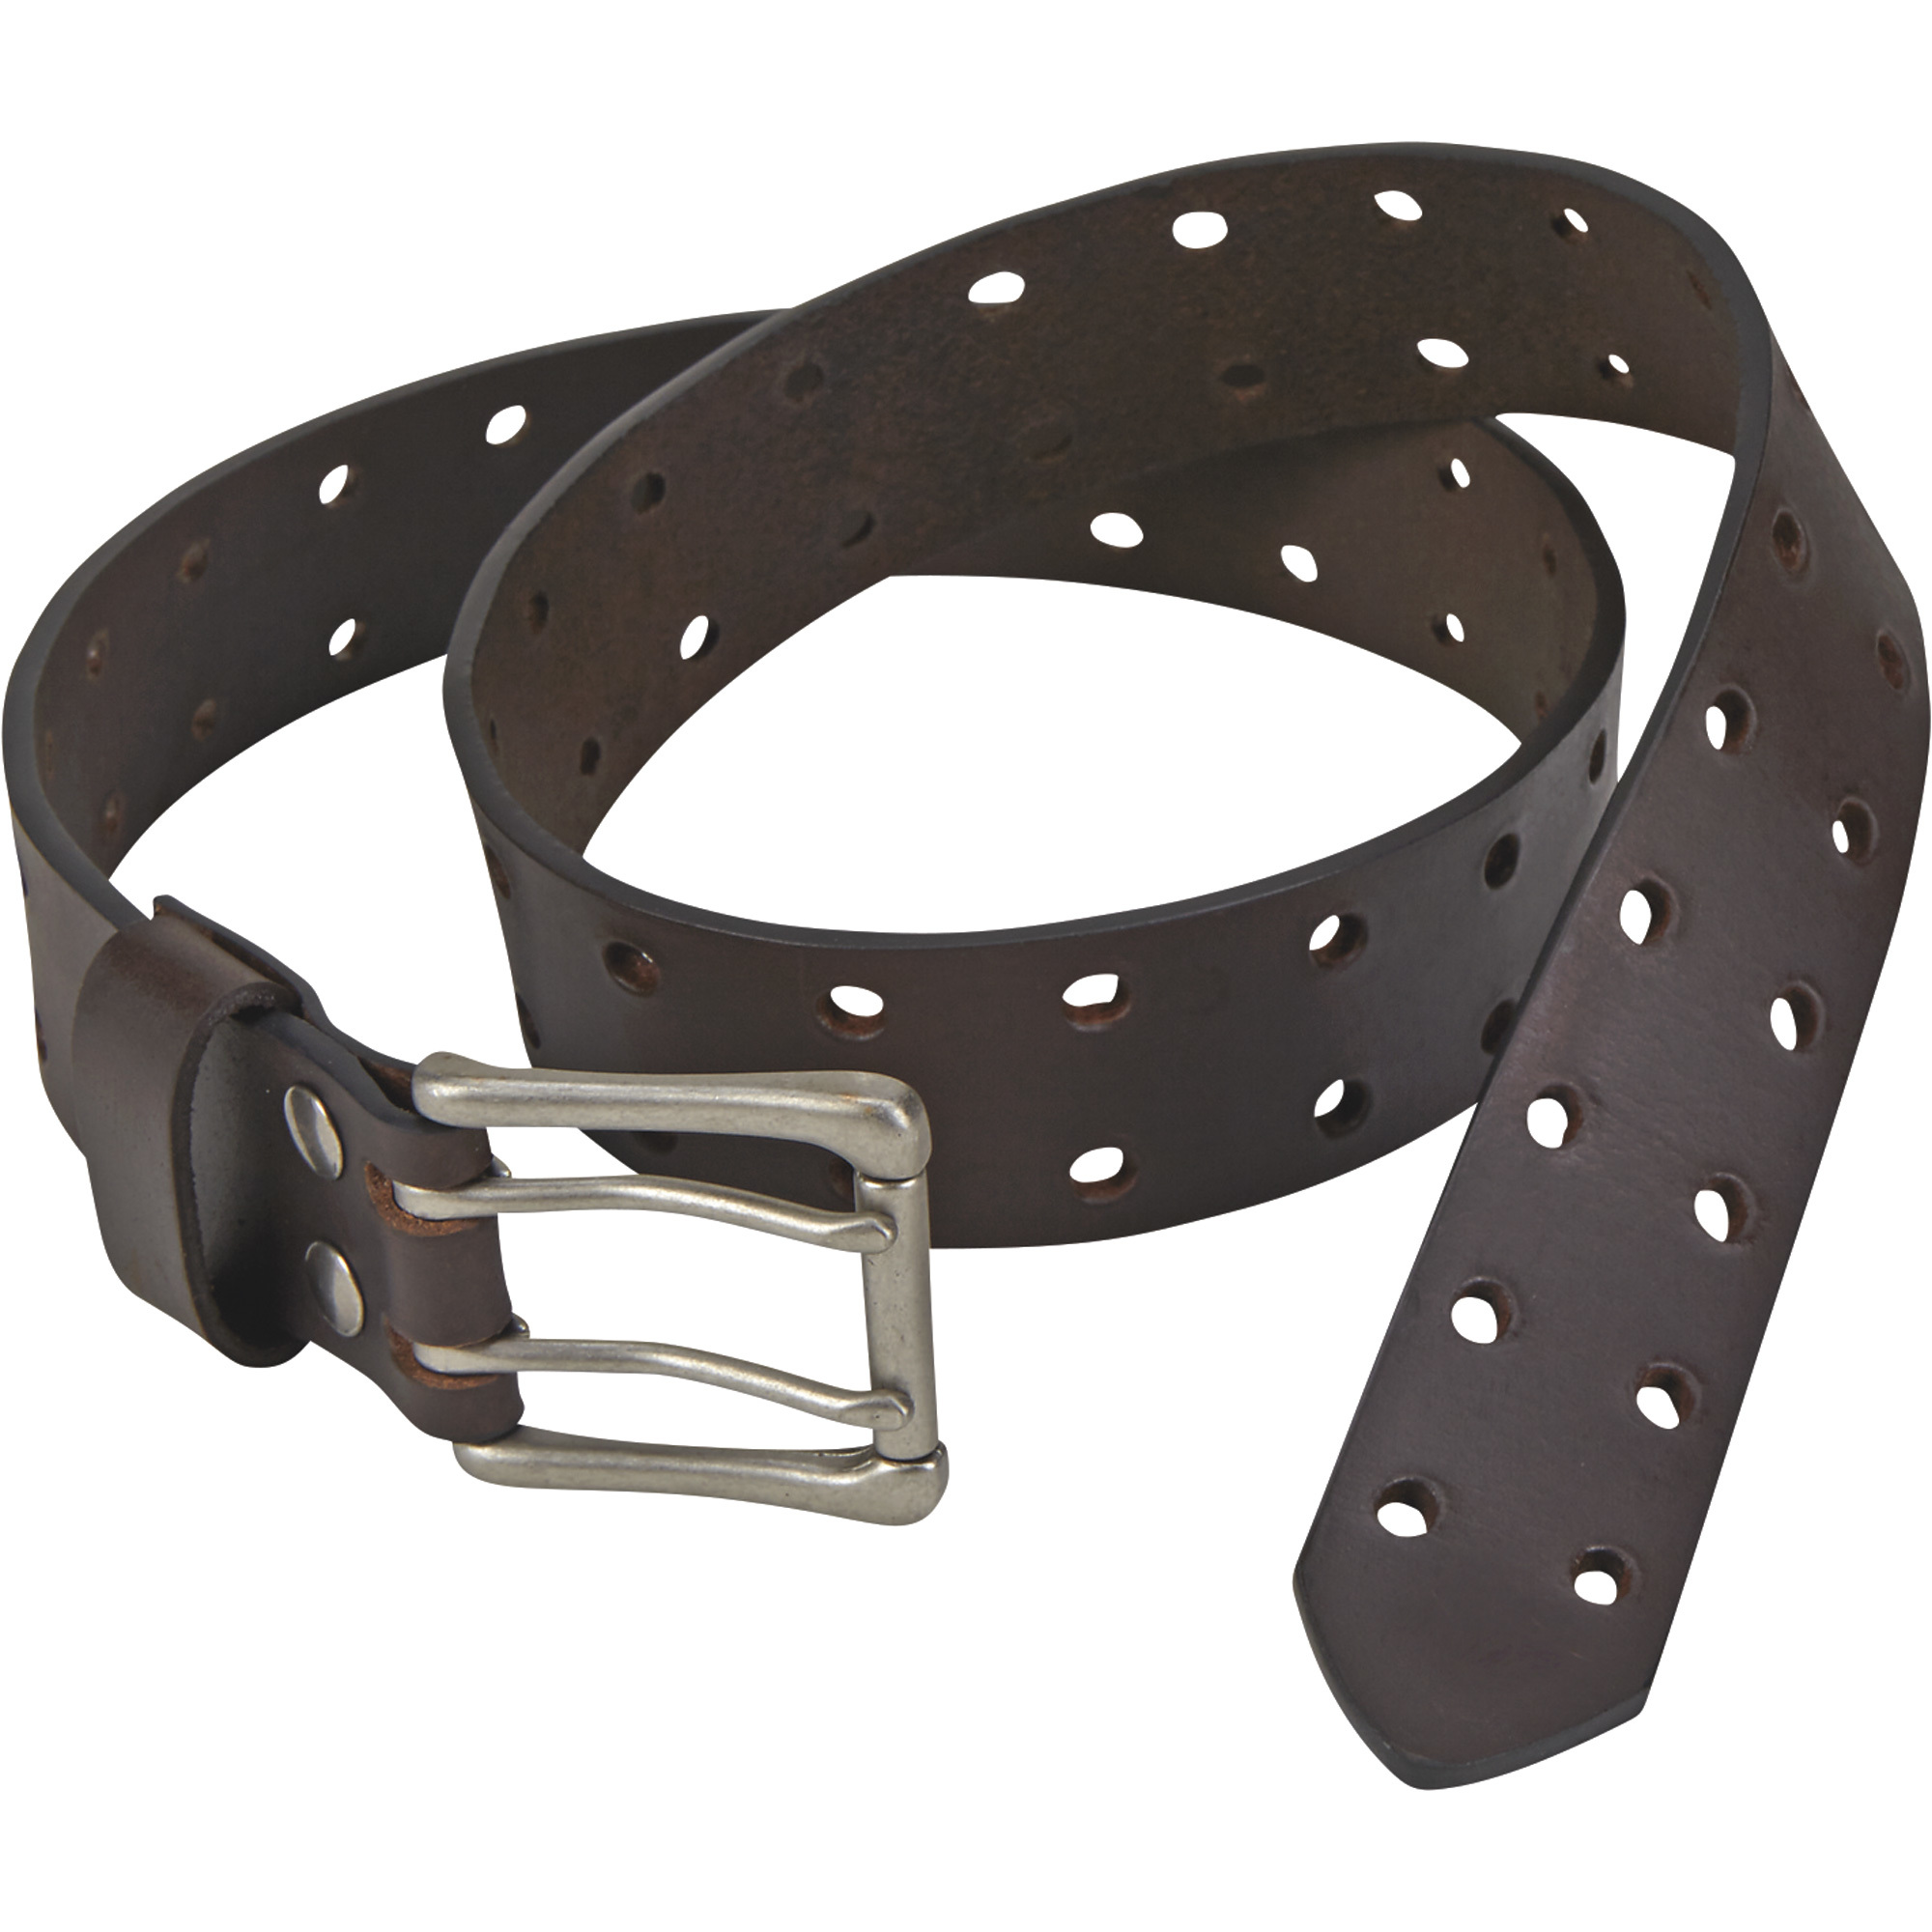 Gravel Gear Men's Double-Perforation Belt - Brown, Size 44, Model 9761